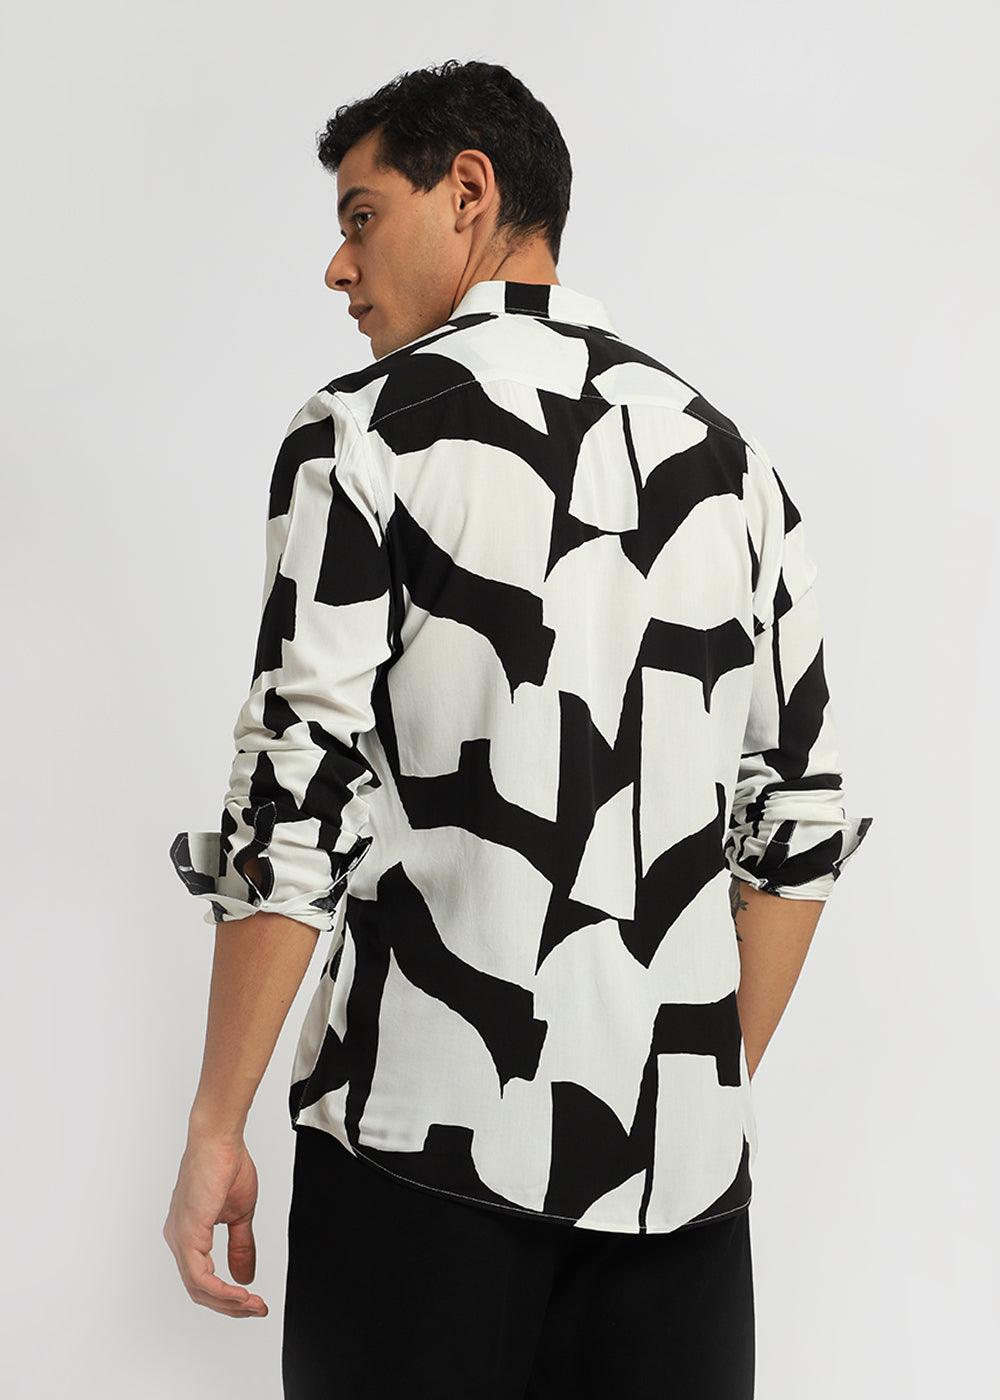 Abstract Monochrome Print Full sleeve shirt